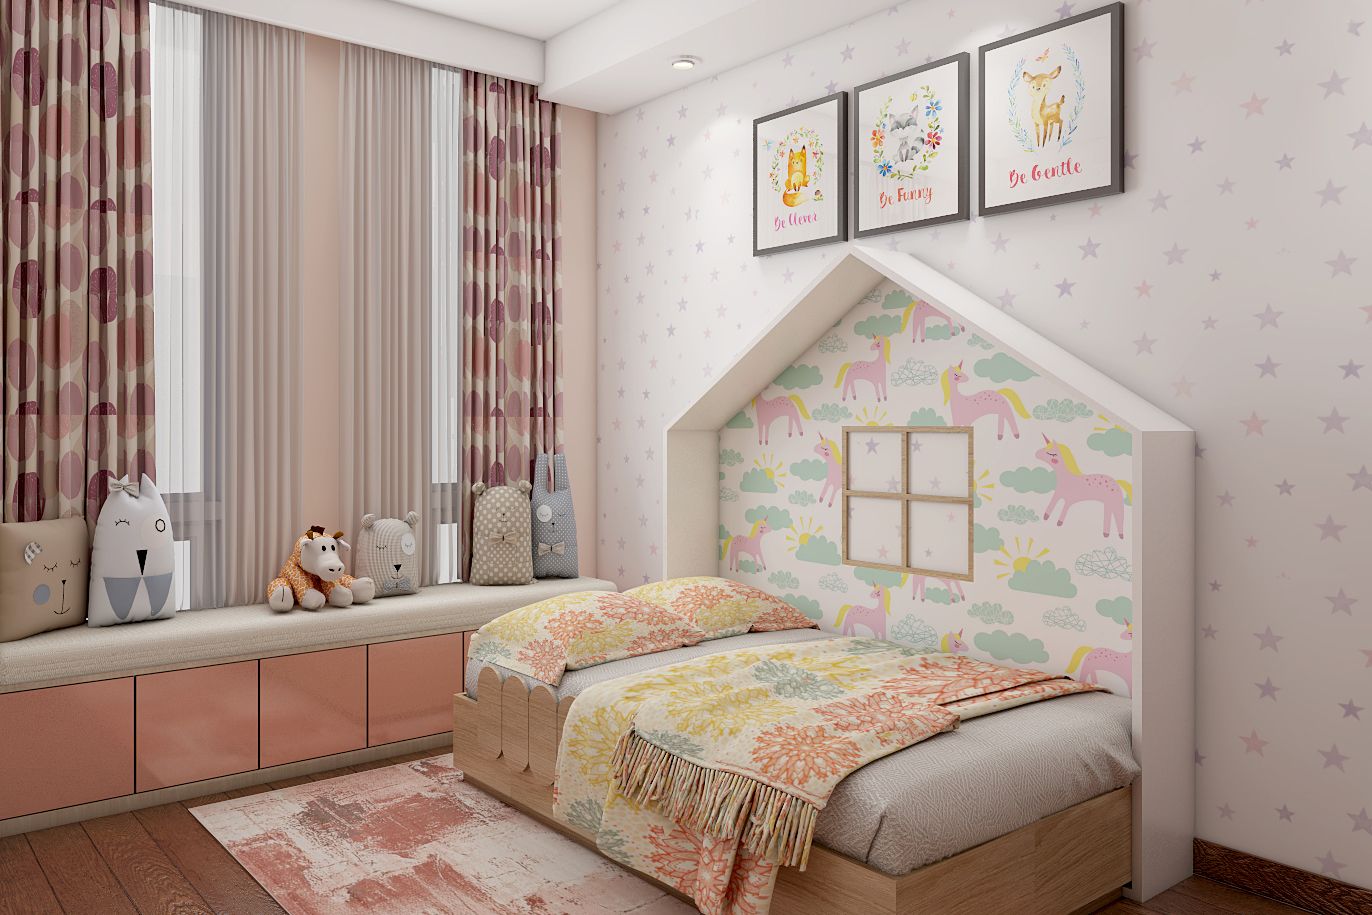 Modern Bedroom Wallpaper Design With Multicoloured Star Motifs